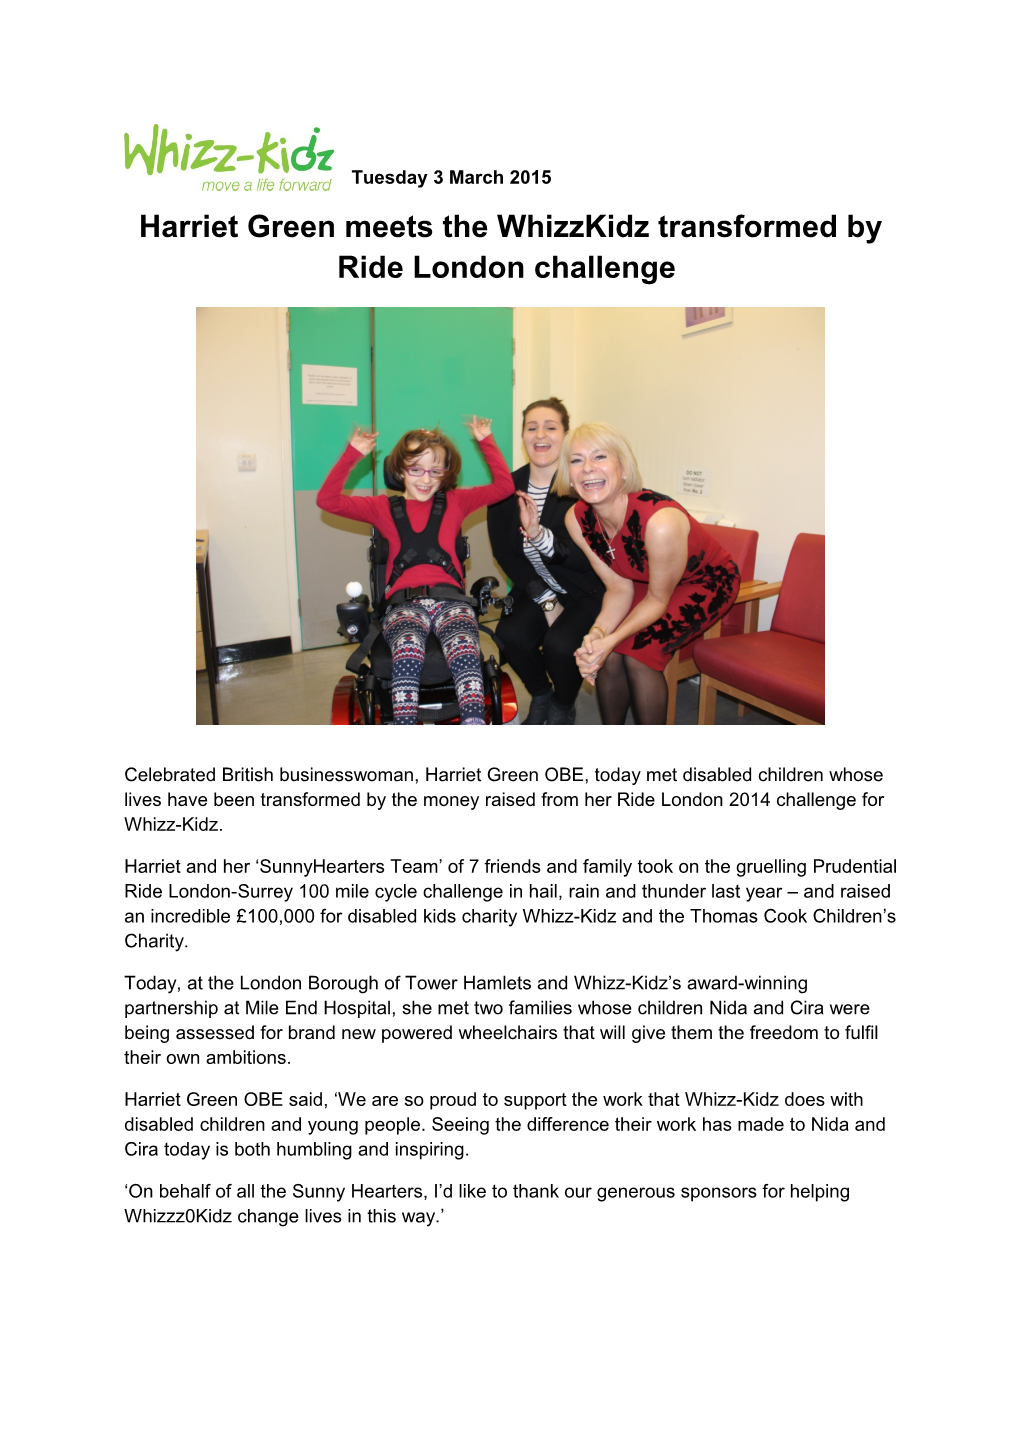 Harriet Green Meets the Whizzkidz Transformed by Ride London Challenge